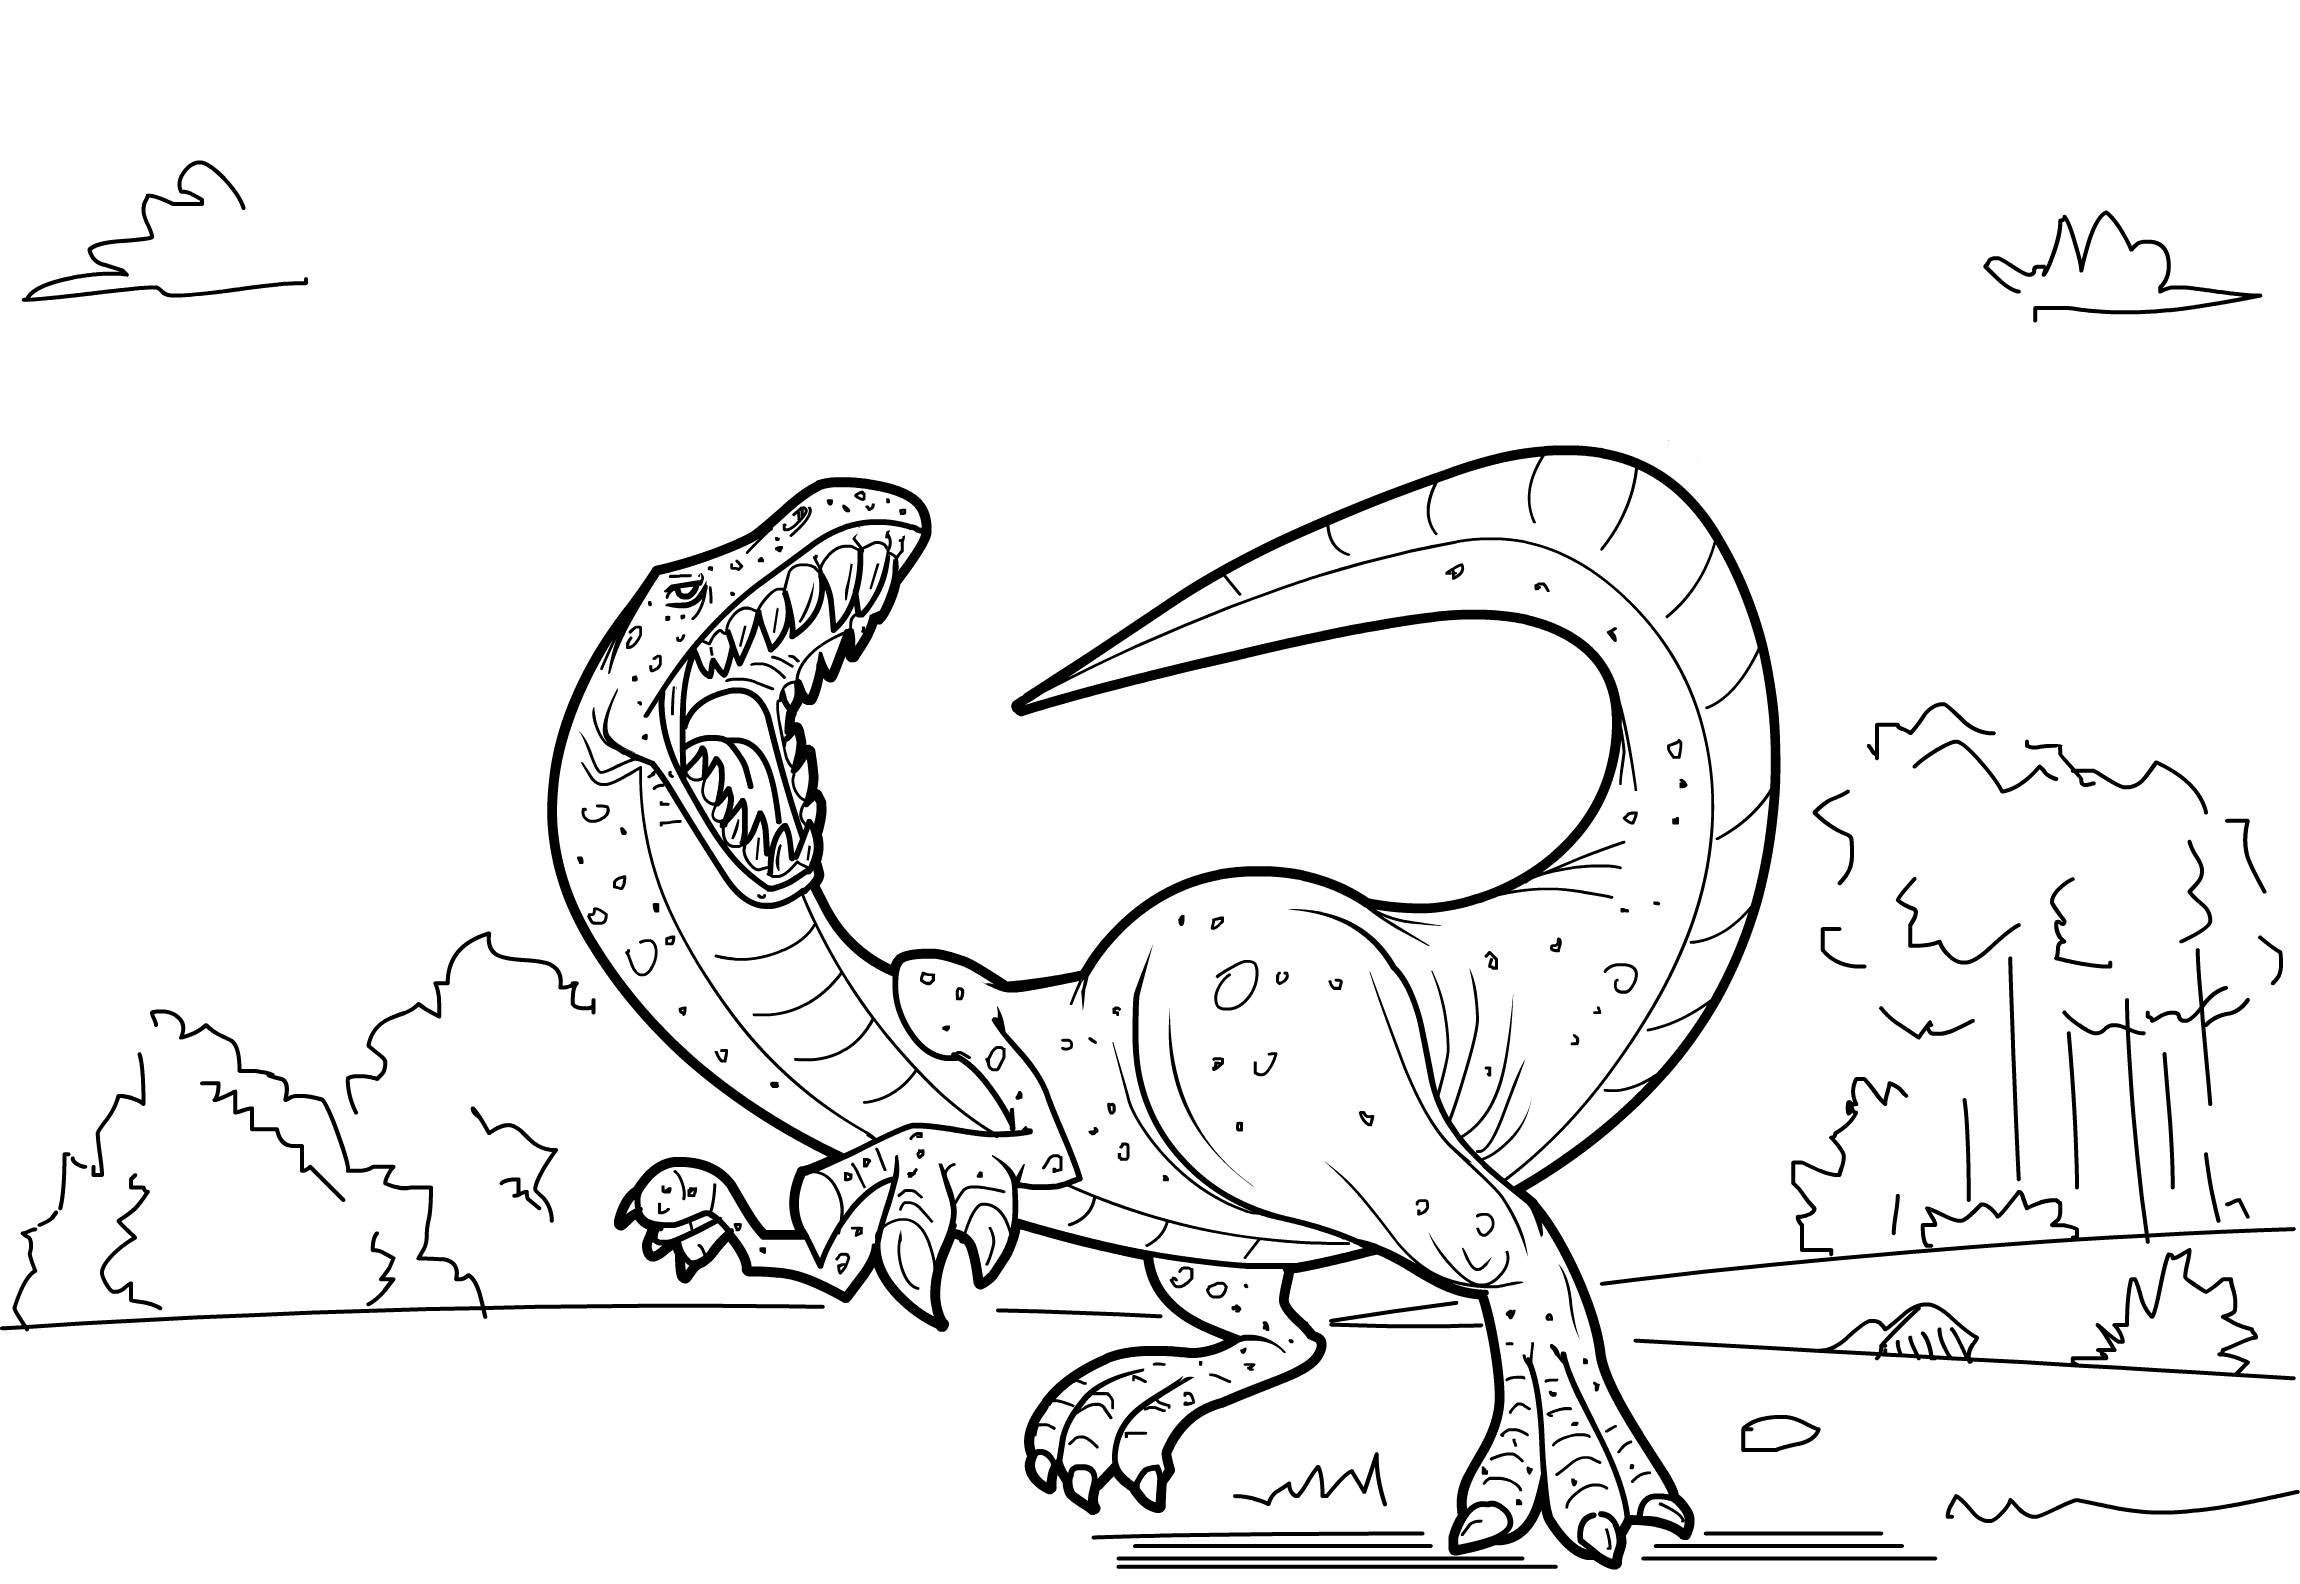 Динозавры раскраска а4. Раскраска динозавр Аллозавр. Раскраска динозавр Галгозавр. Динозавры / раскраска.